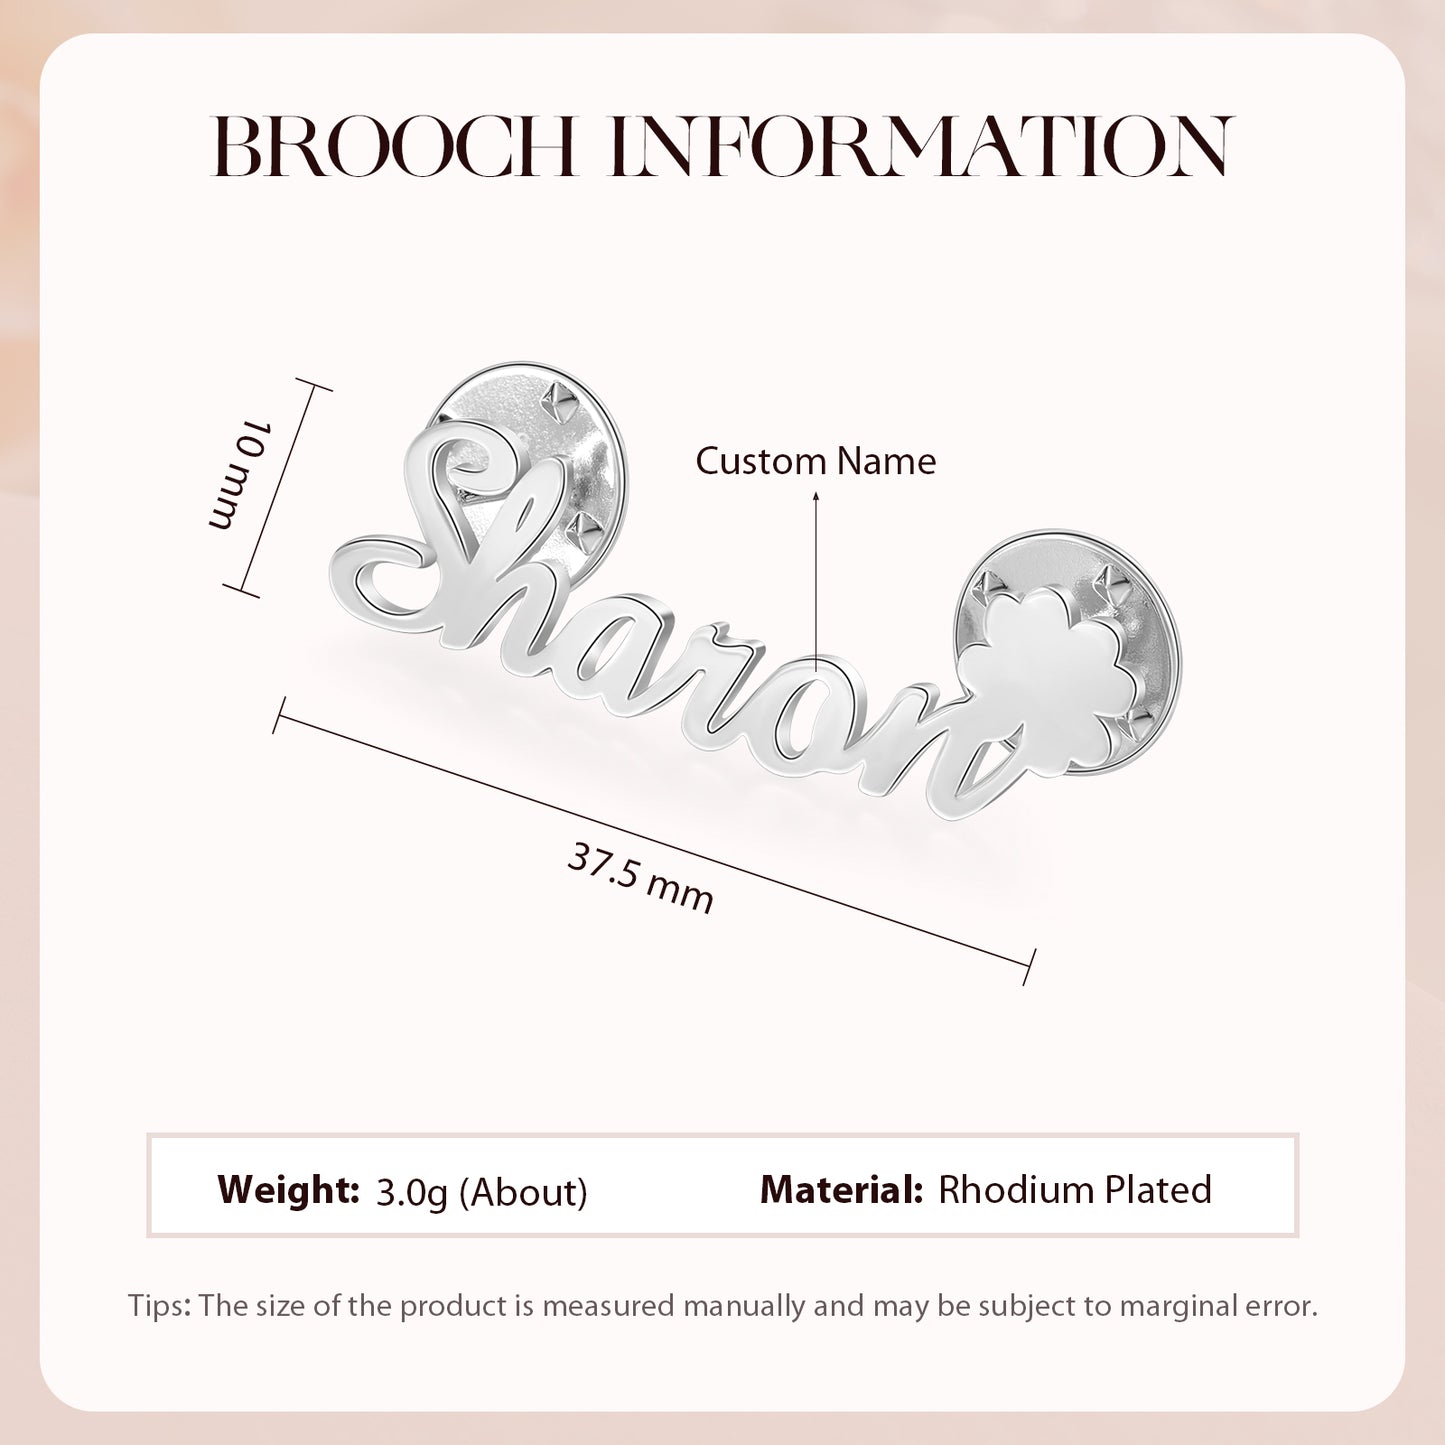 Custom Name Brooch